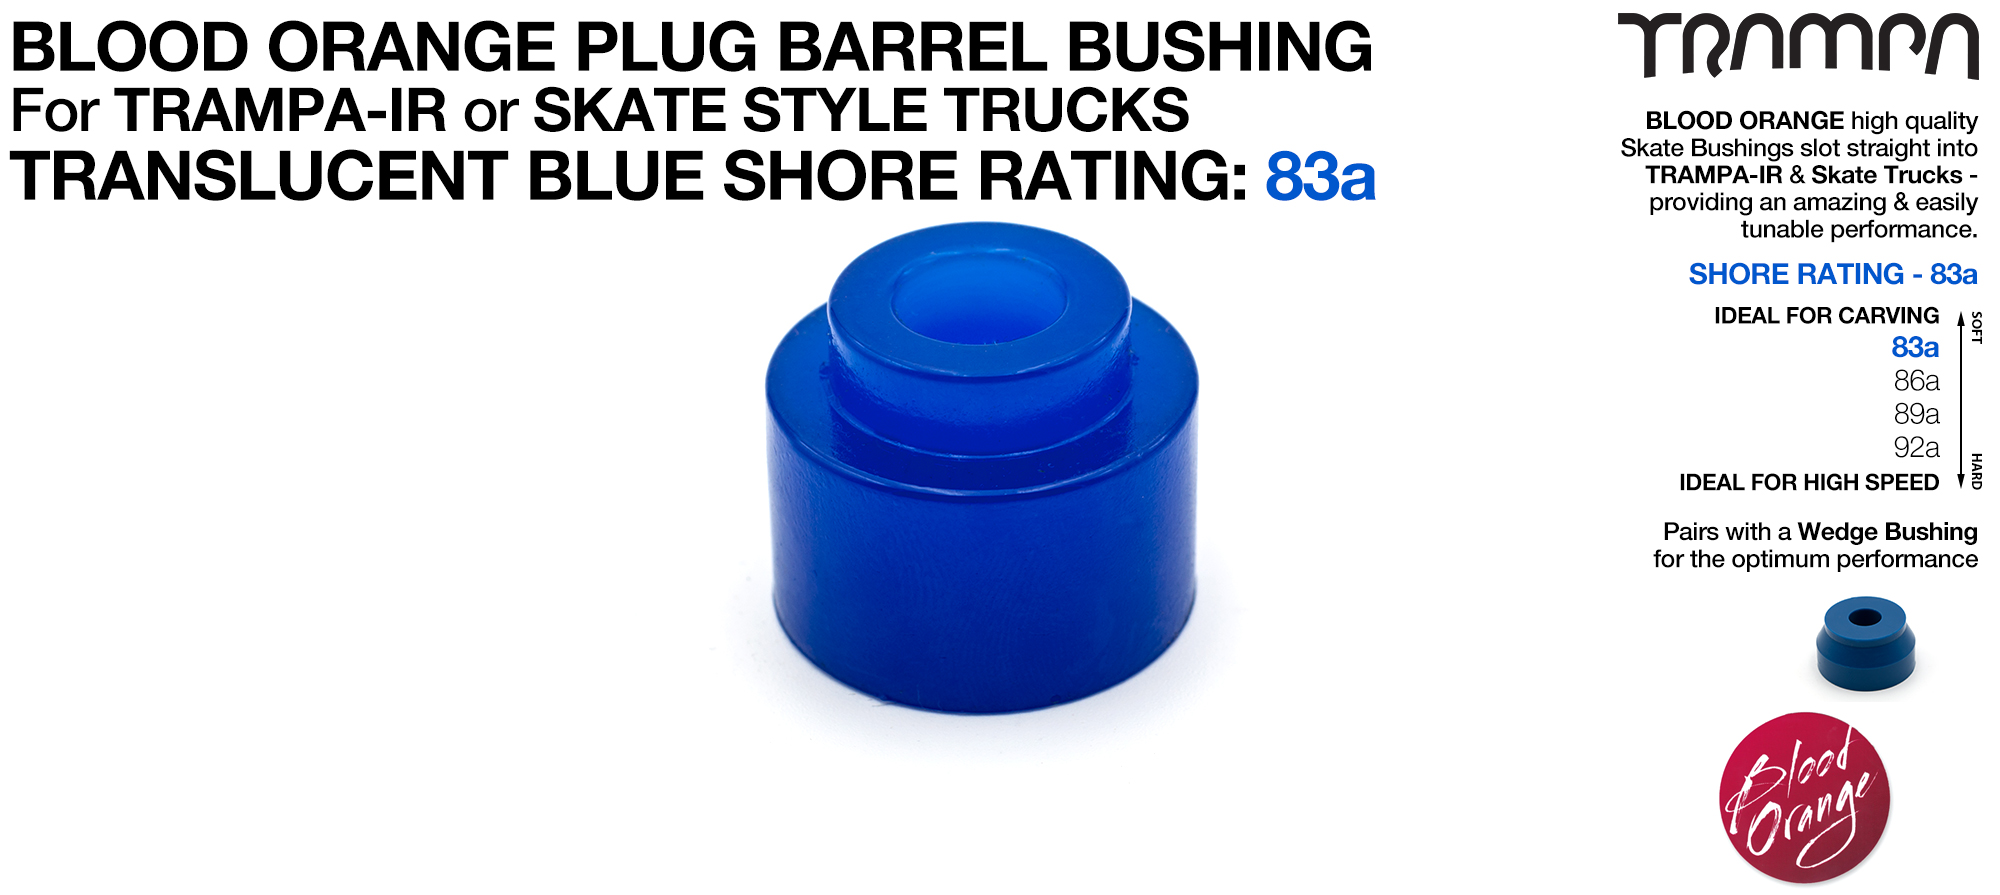 Blood Orange PLUG BARREL - TRANSLUCENT BLUE 83a